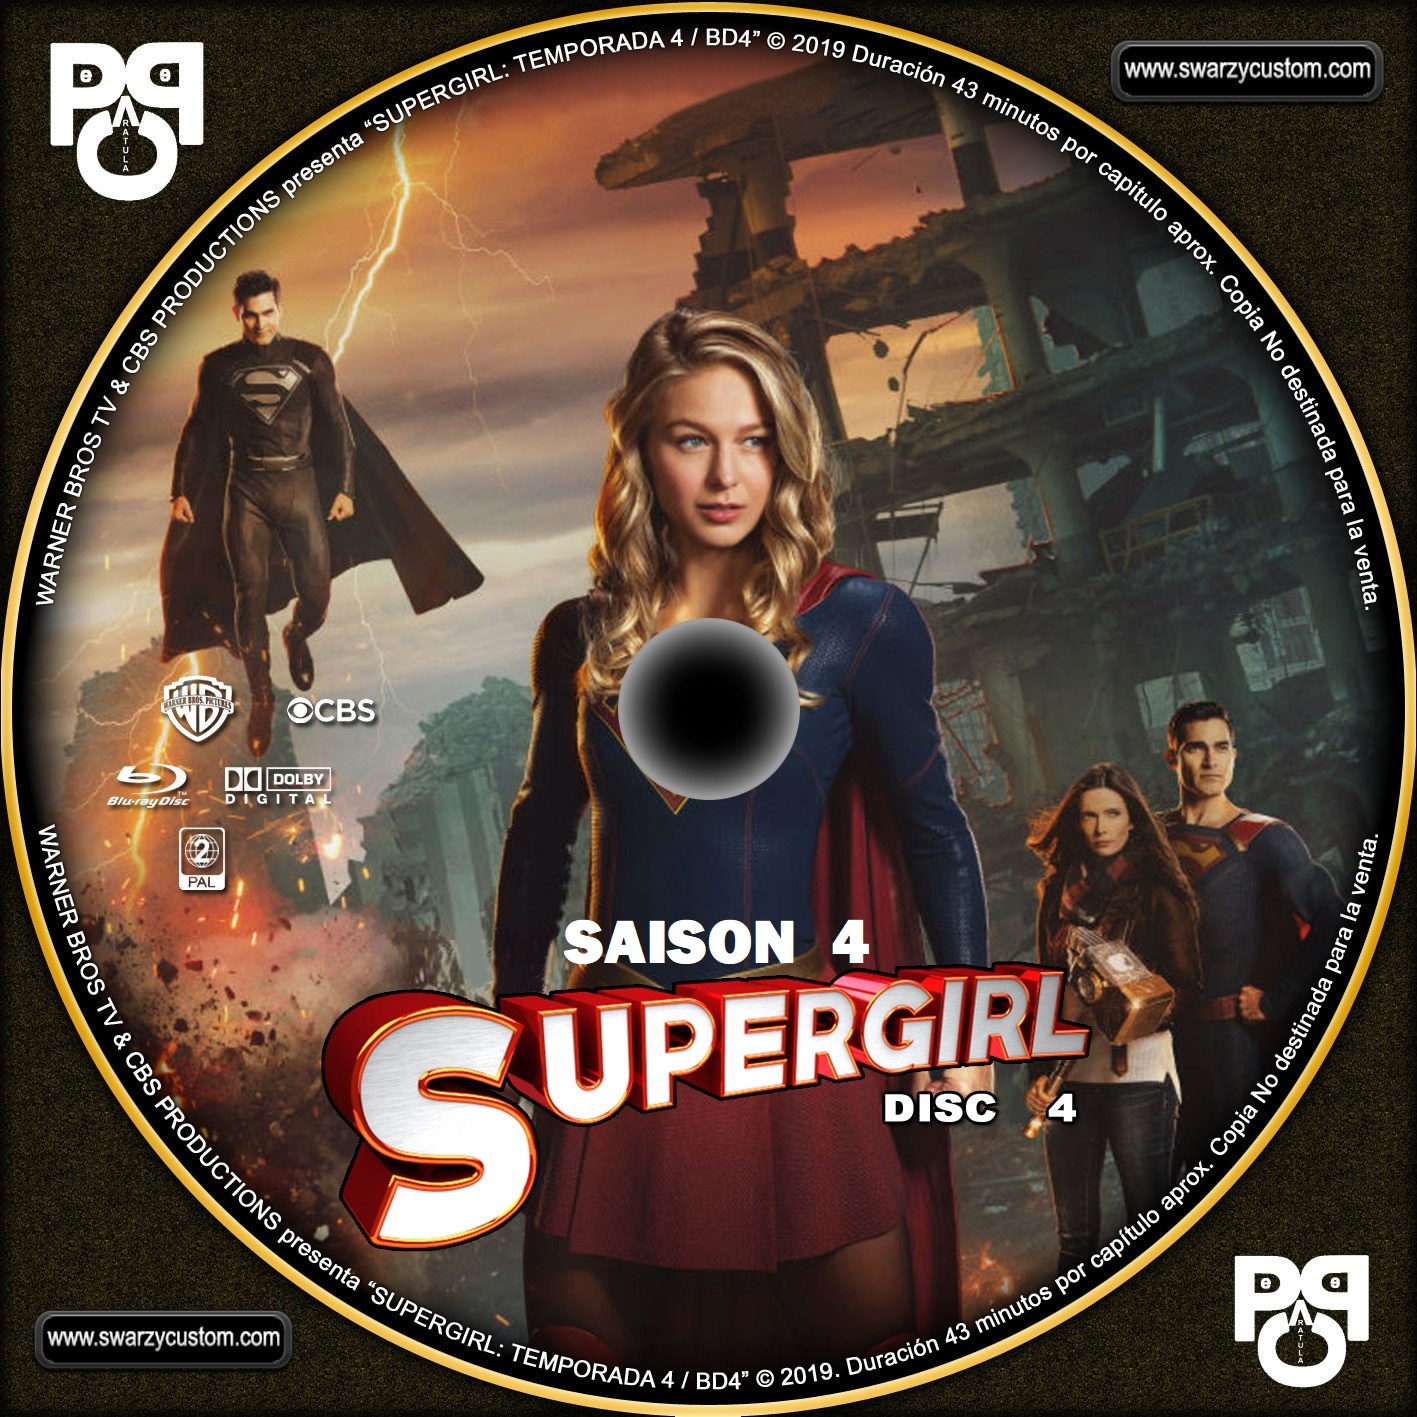 Supergirl saison 4 custom (BLU-RAY) DISC 4